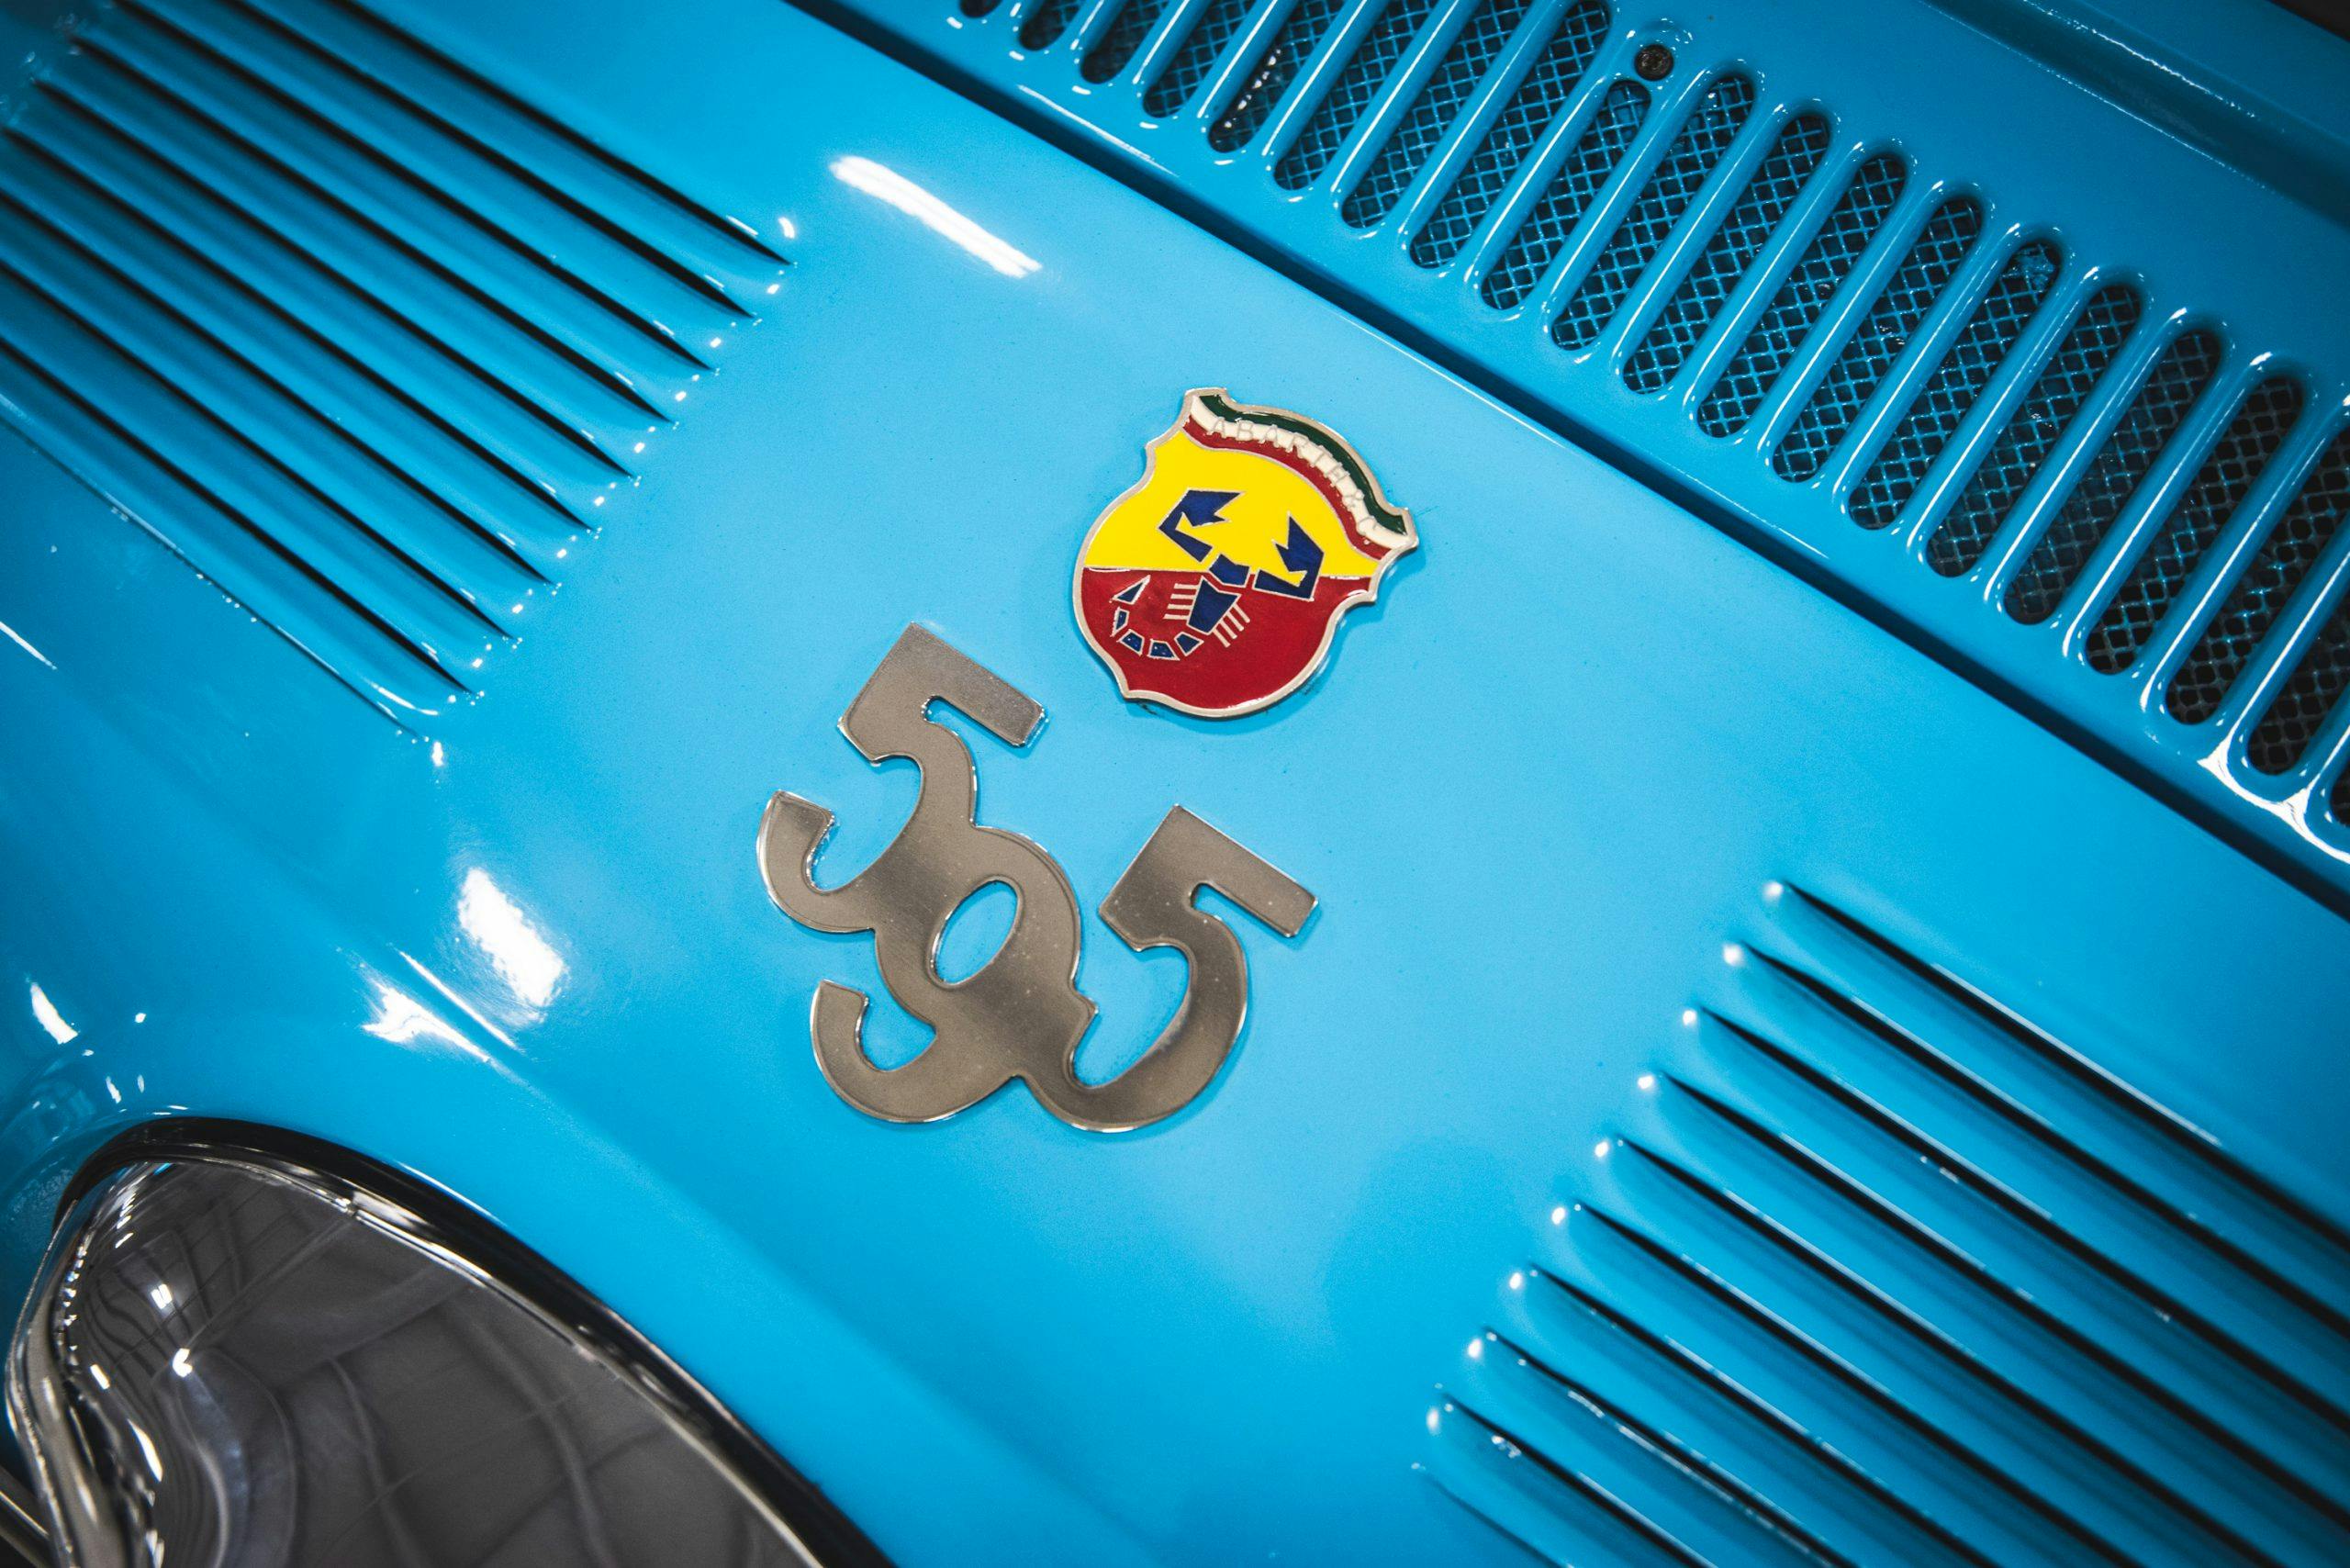 595 abarth emblem on blue